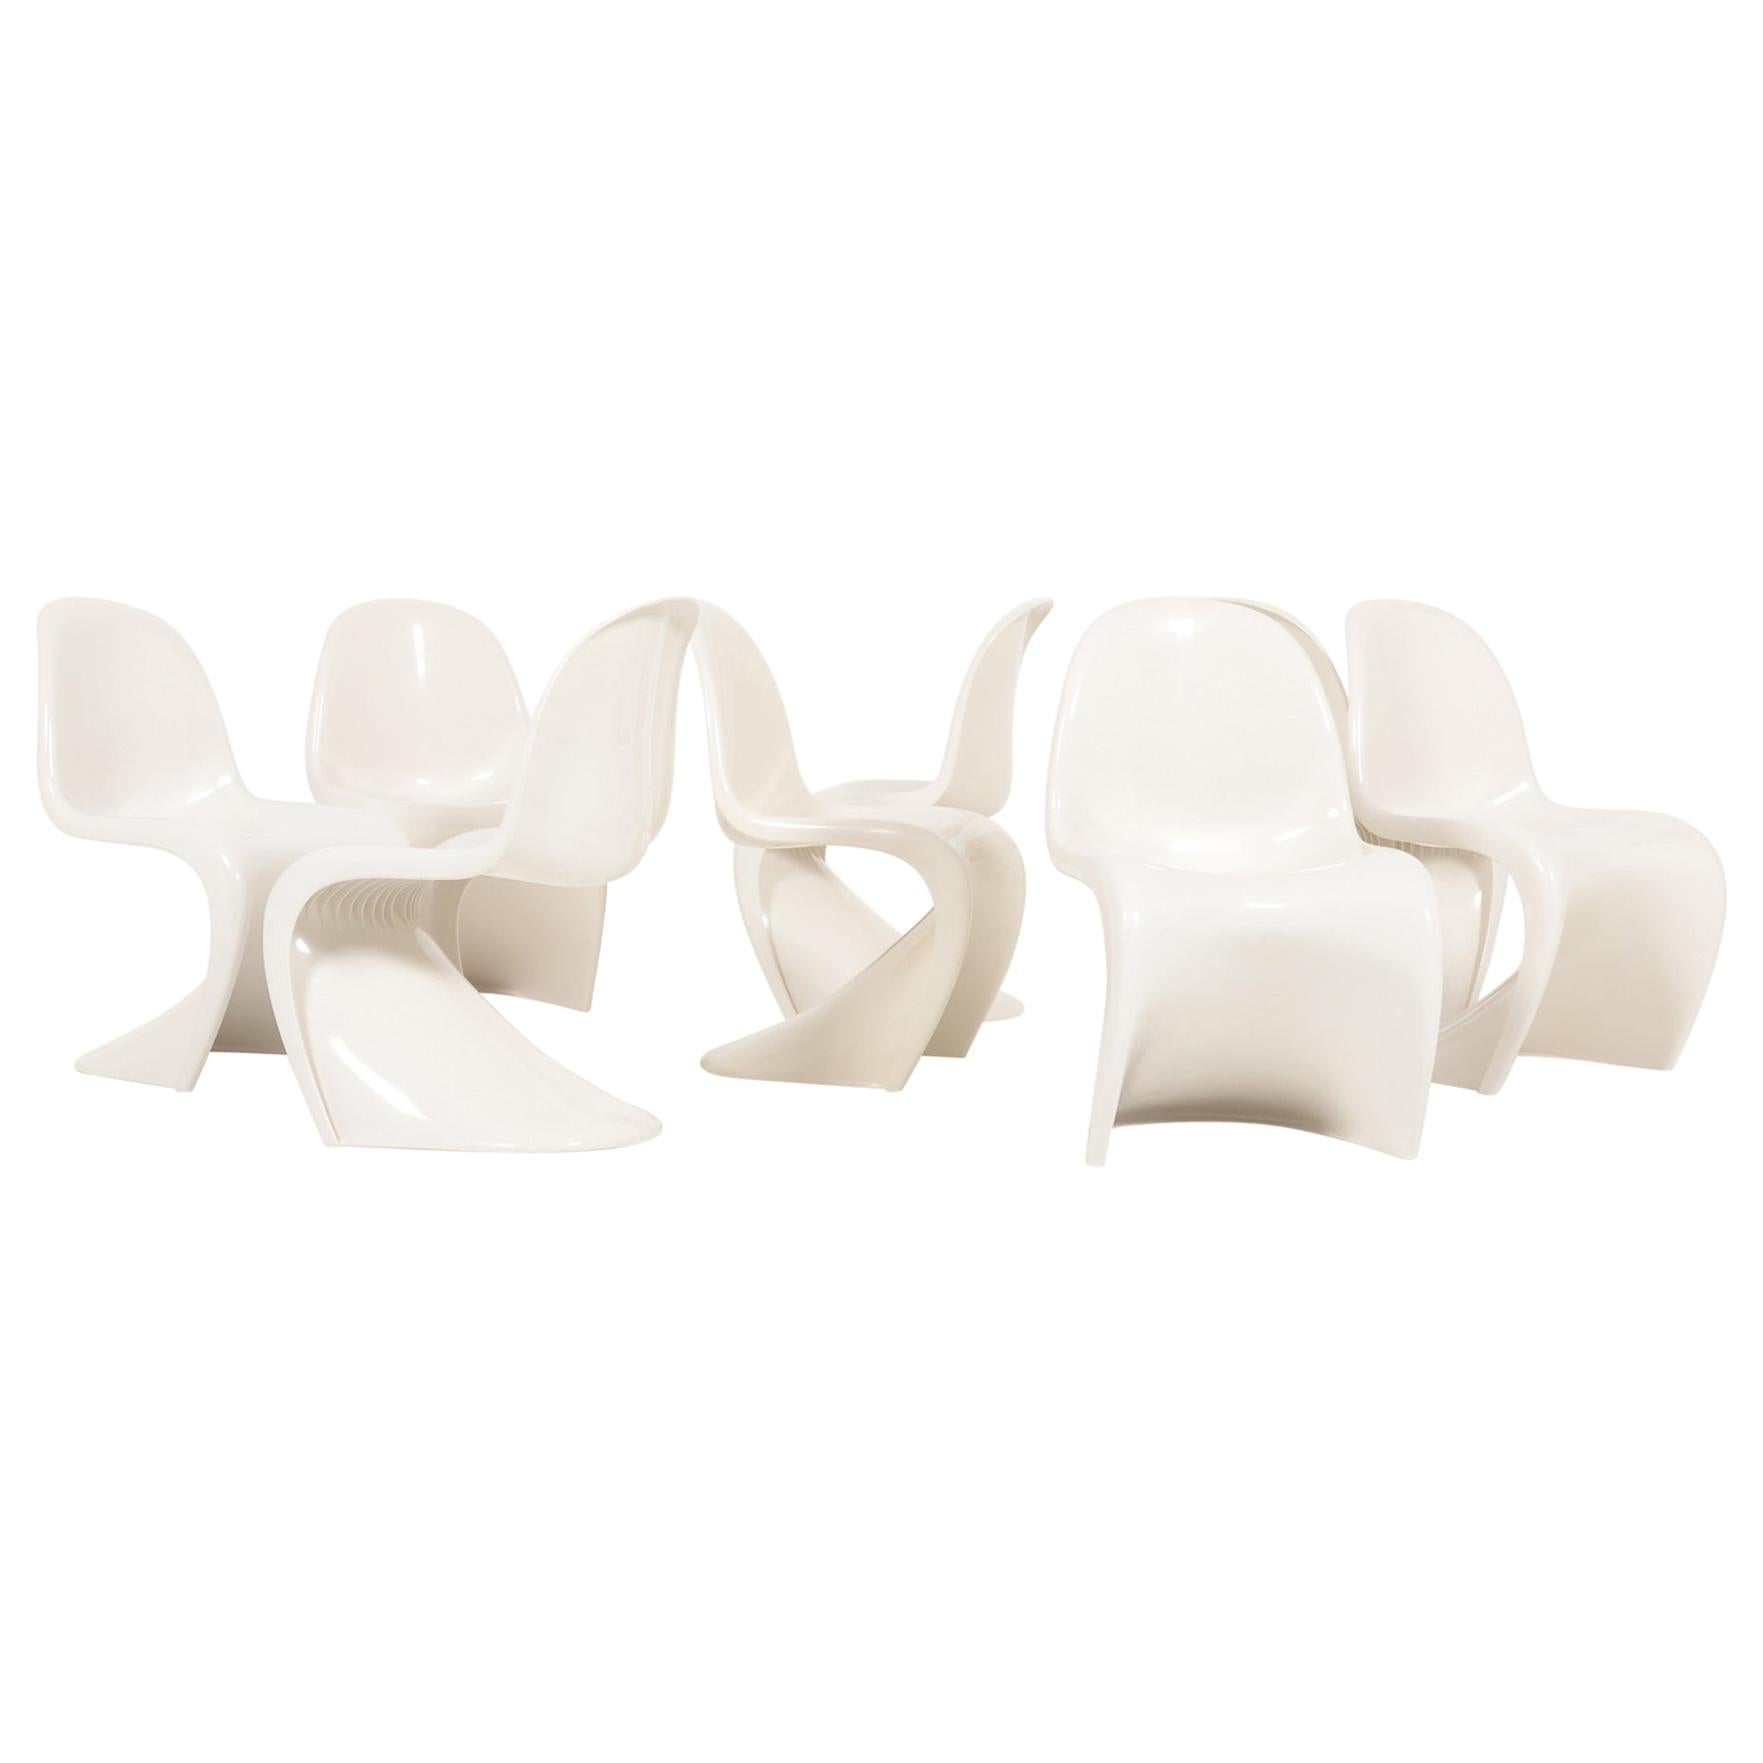 Set of 8 Panton Chairs by Verner Panton for Herman Miller